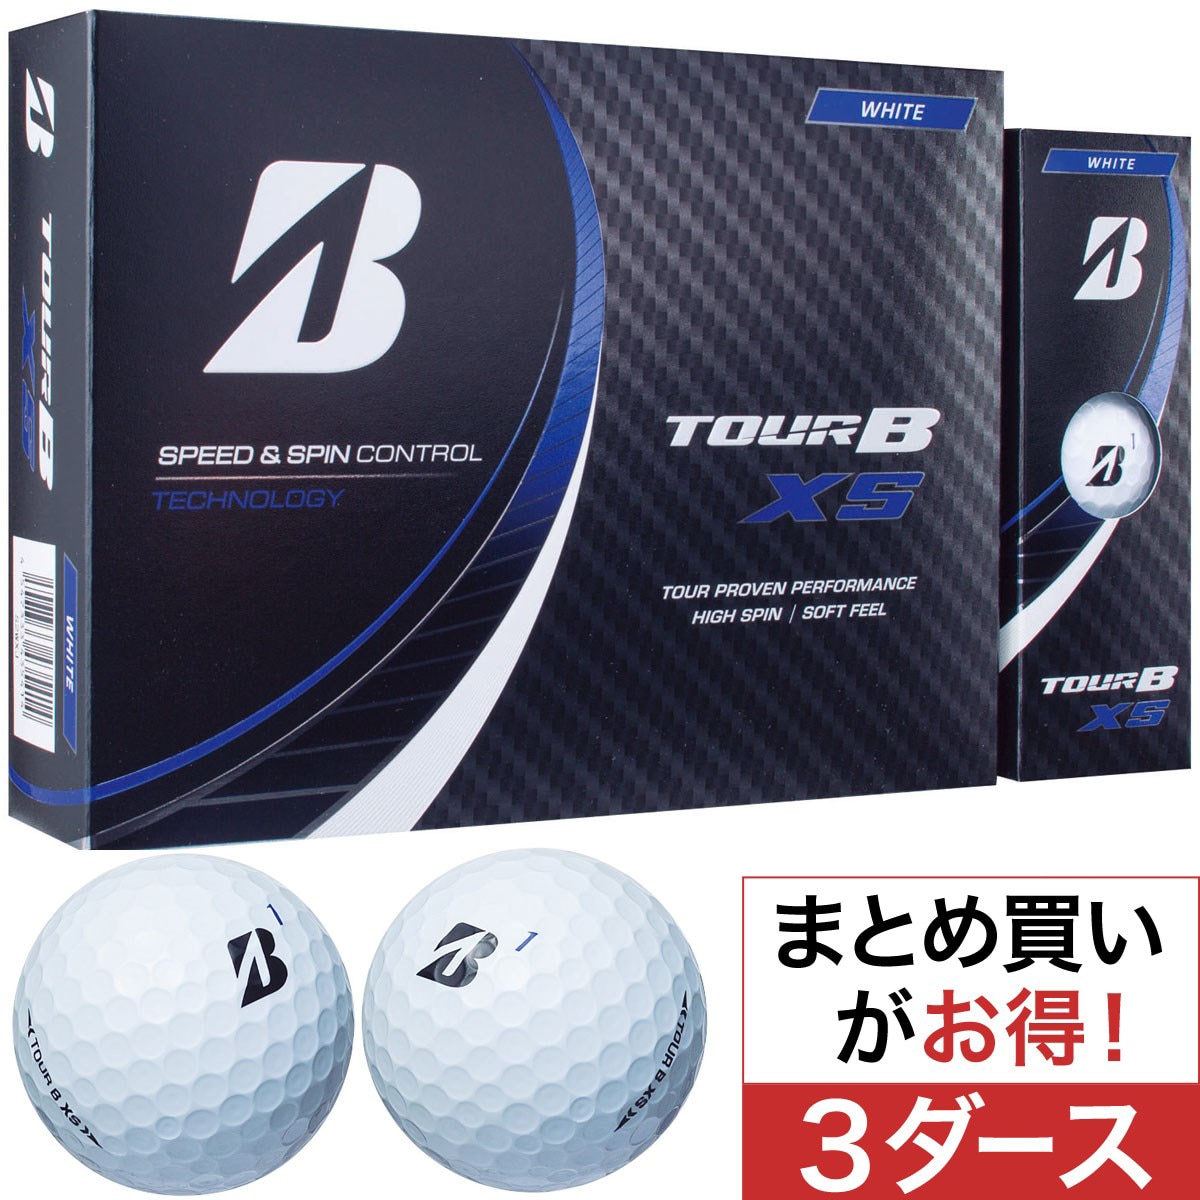 TOUR B XS ホワイト 3ダース 2022 日本版ゴルフボール - その他